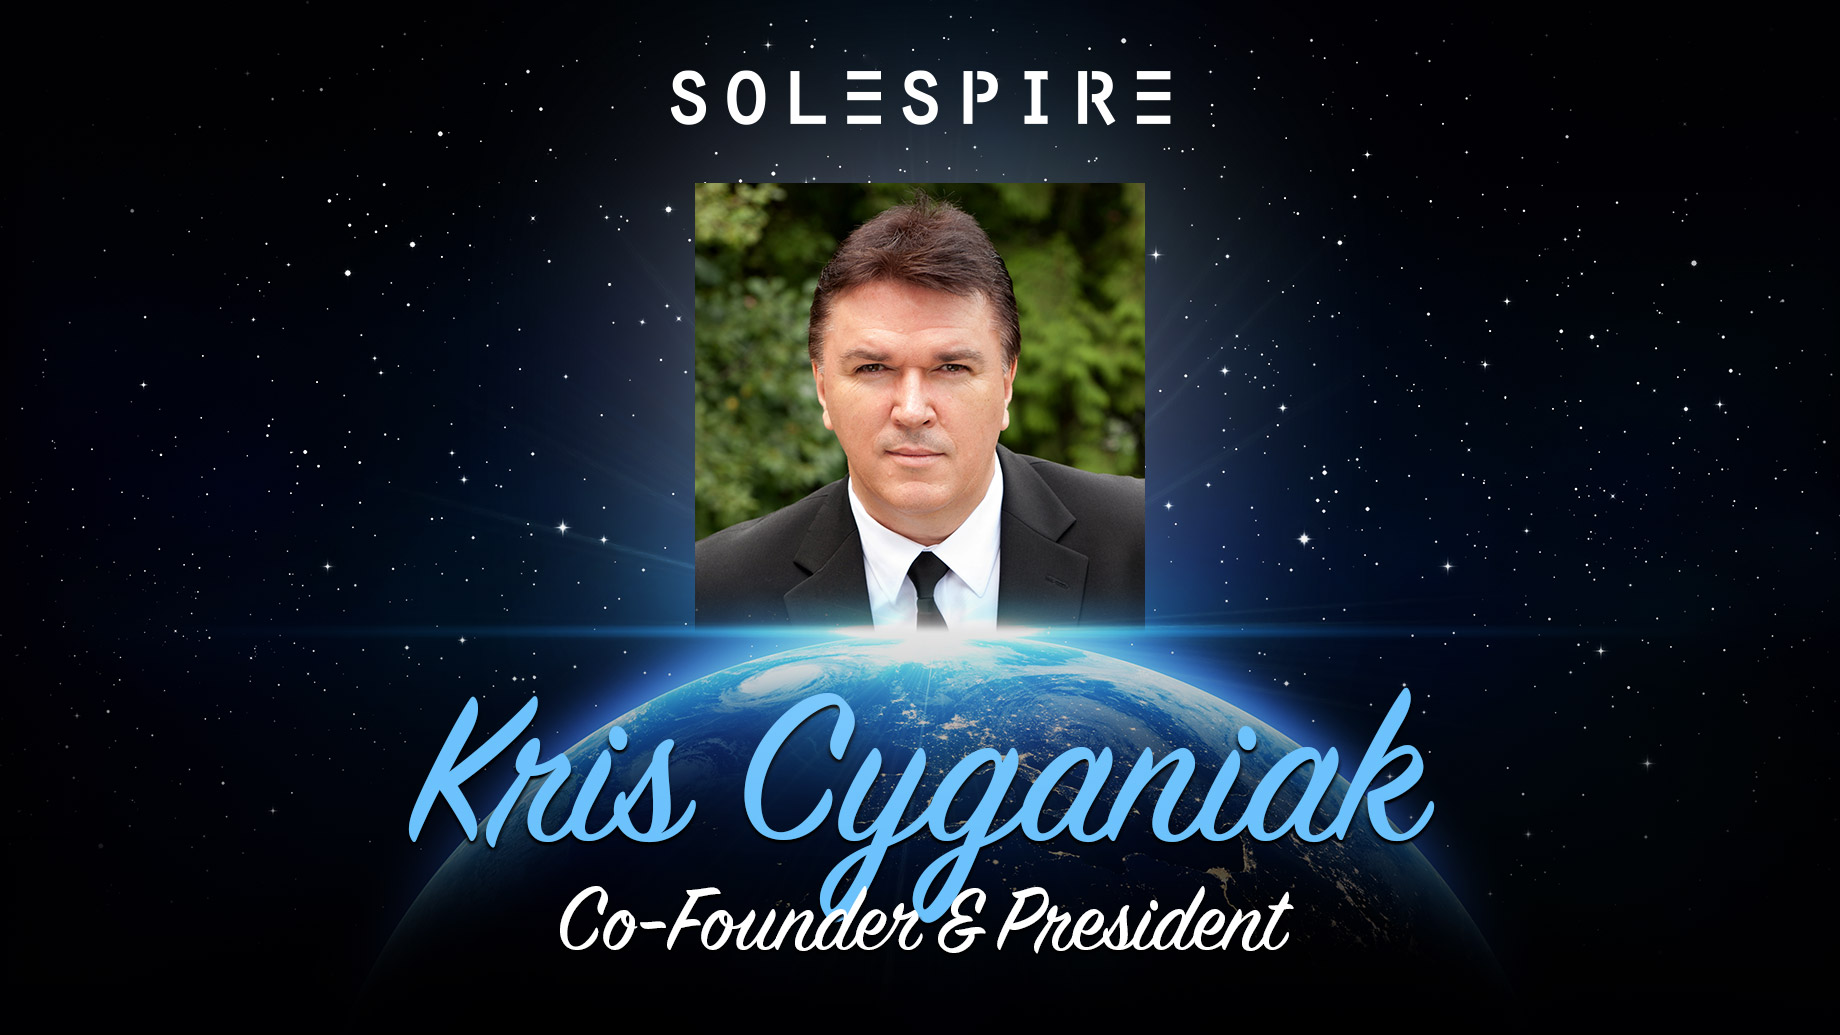 Kris Cyganiak - Solespire Co-Founder & President